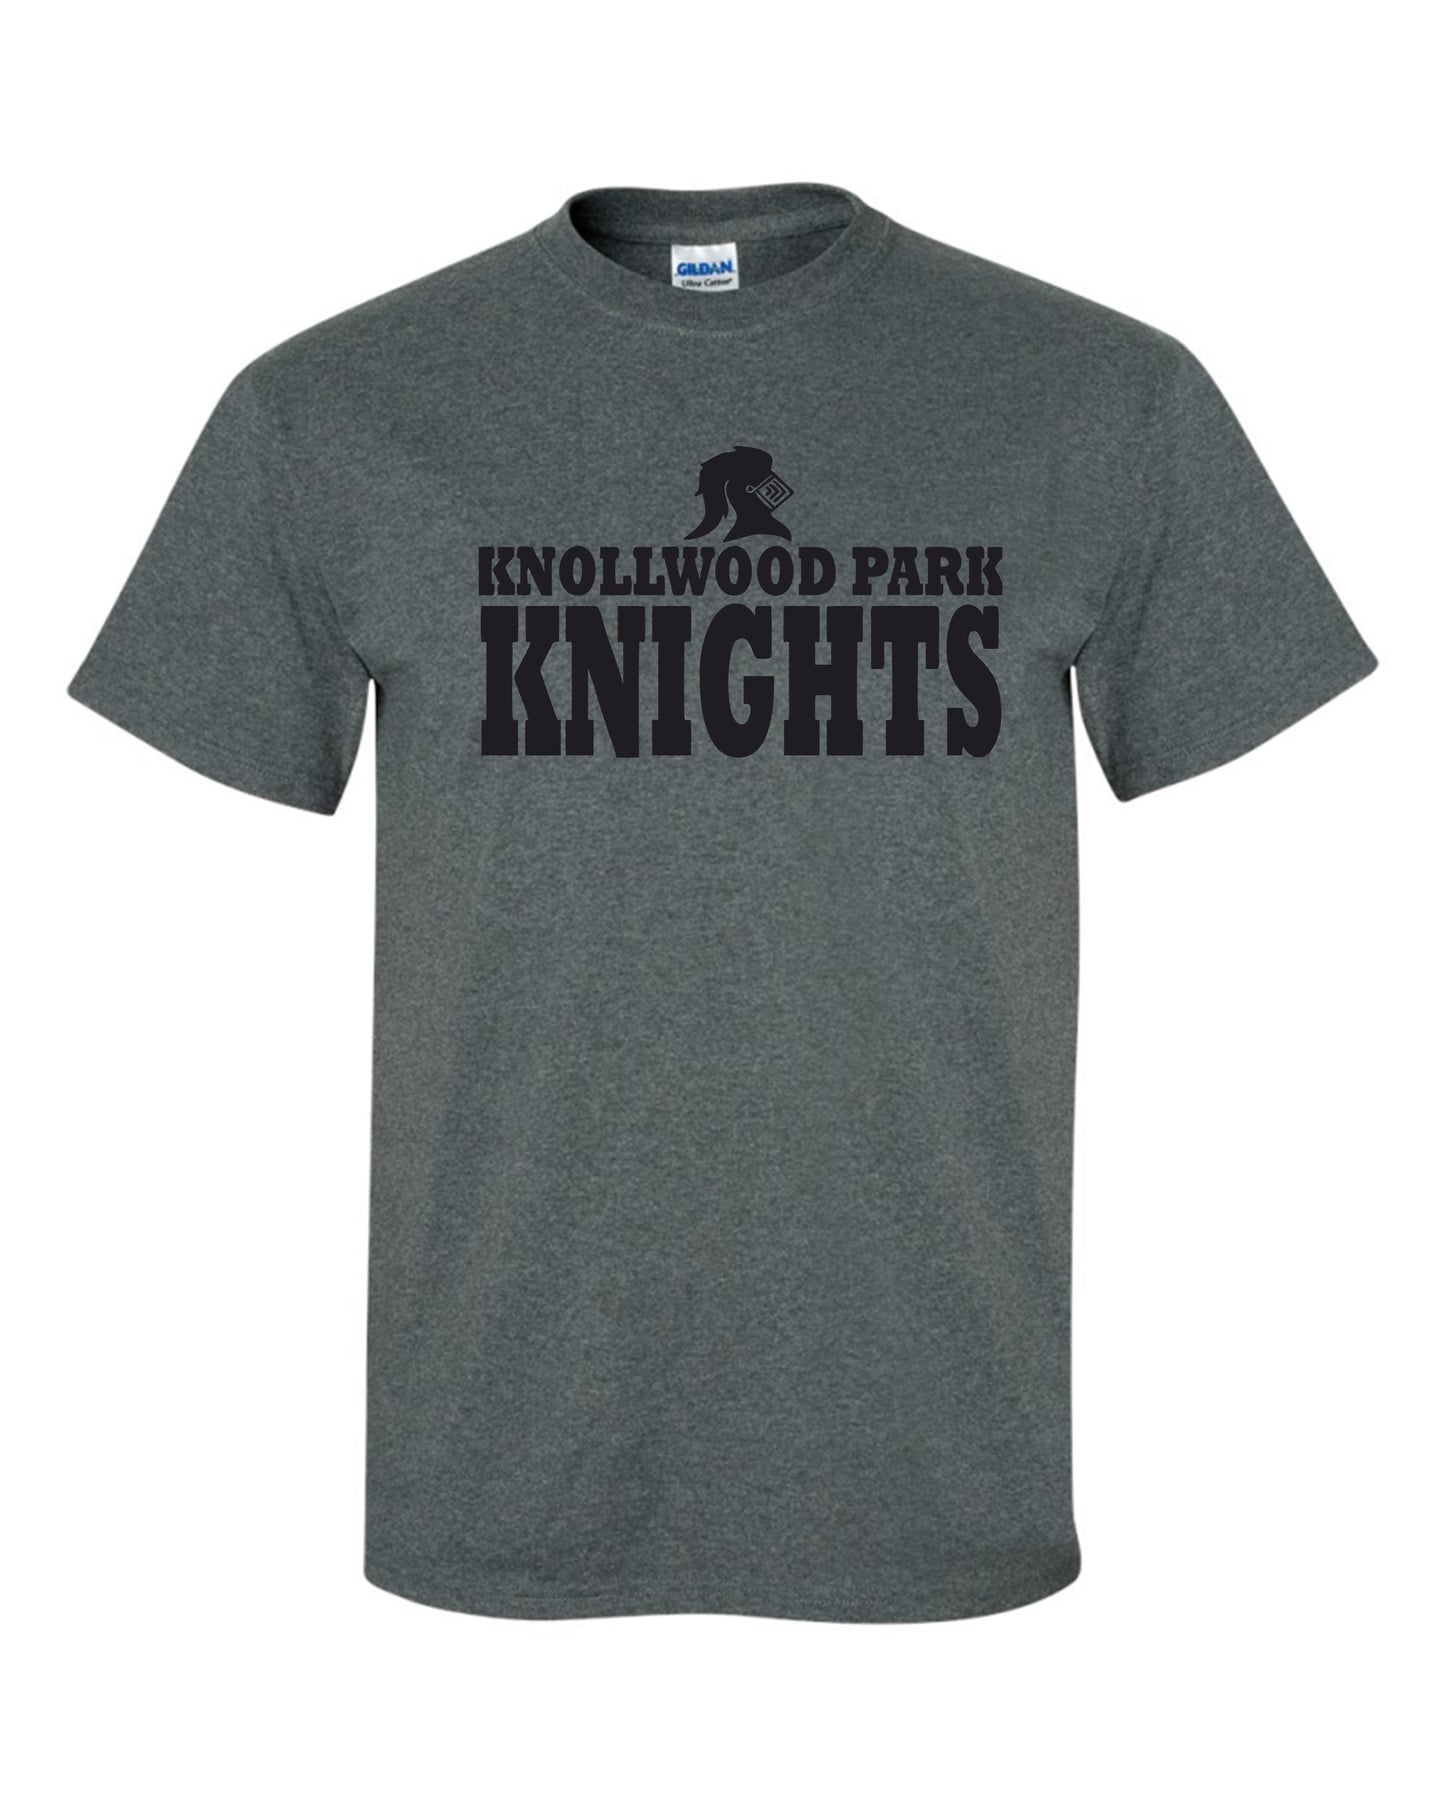 Knollwood Park Spirit Wear Adult Cotton T-Shirt